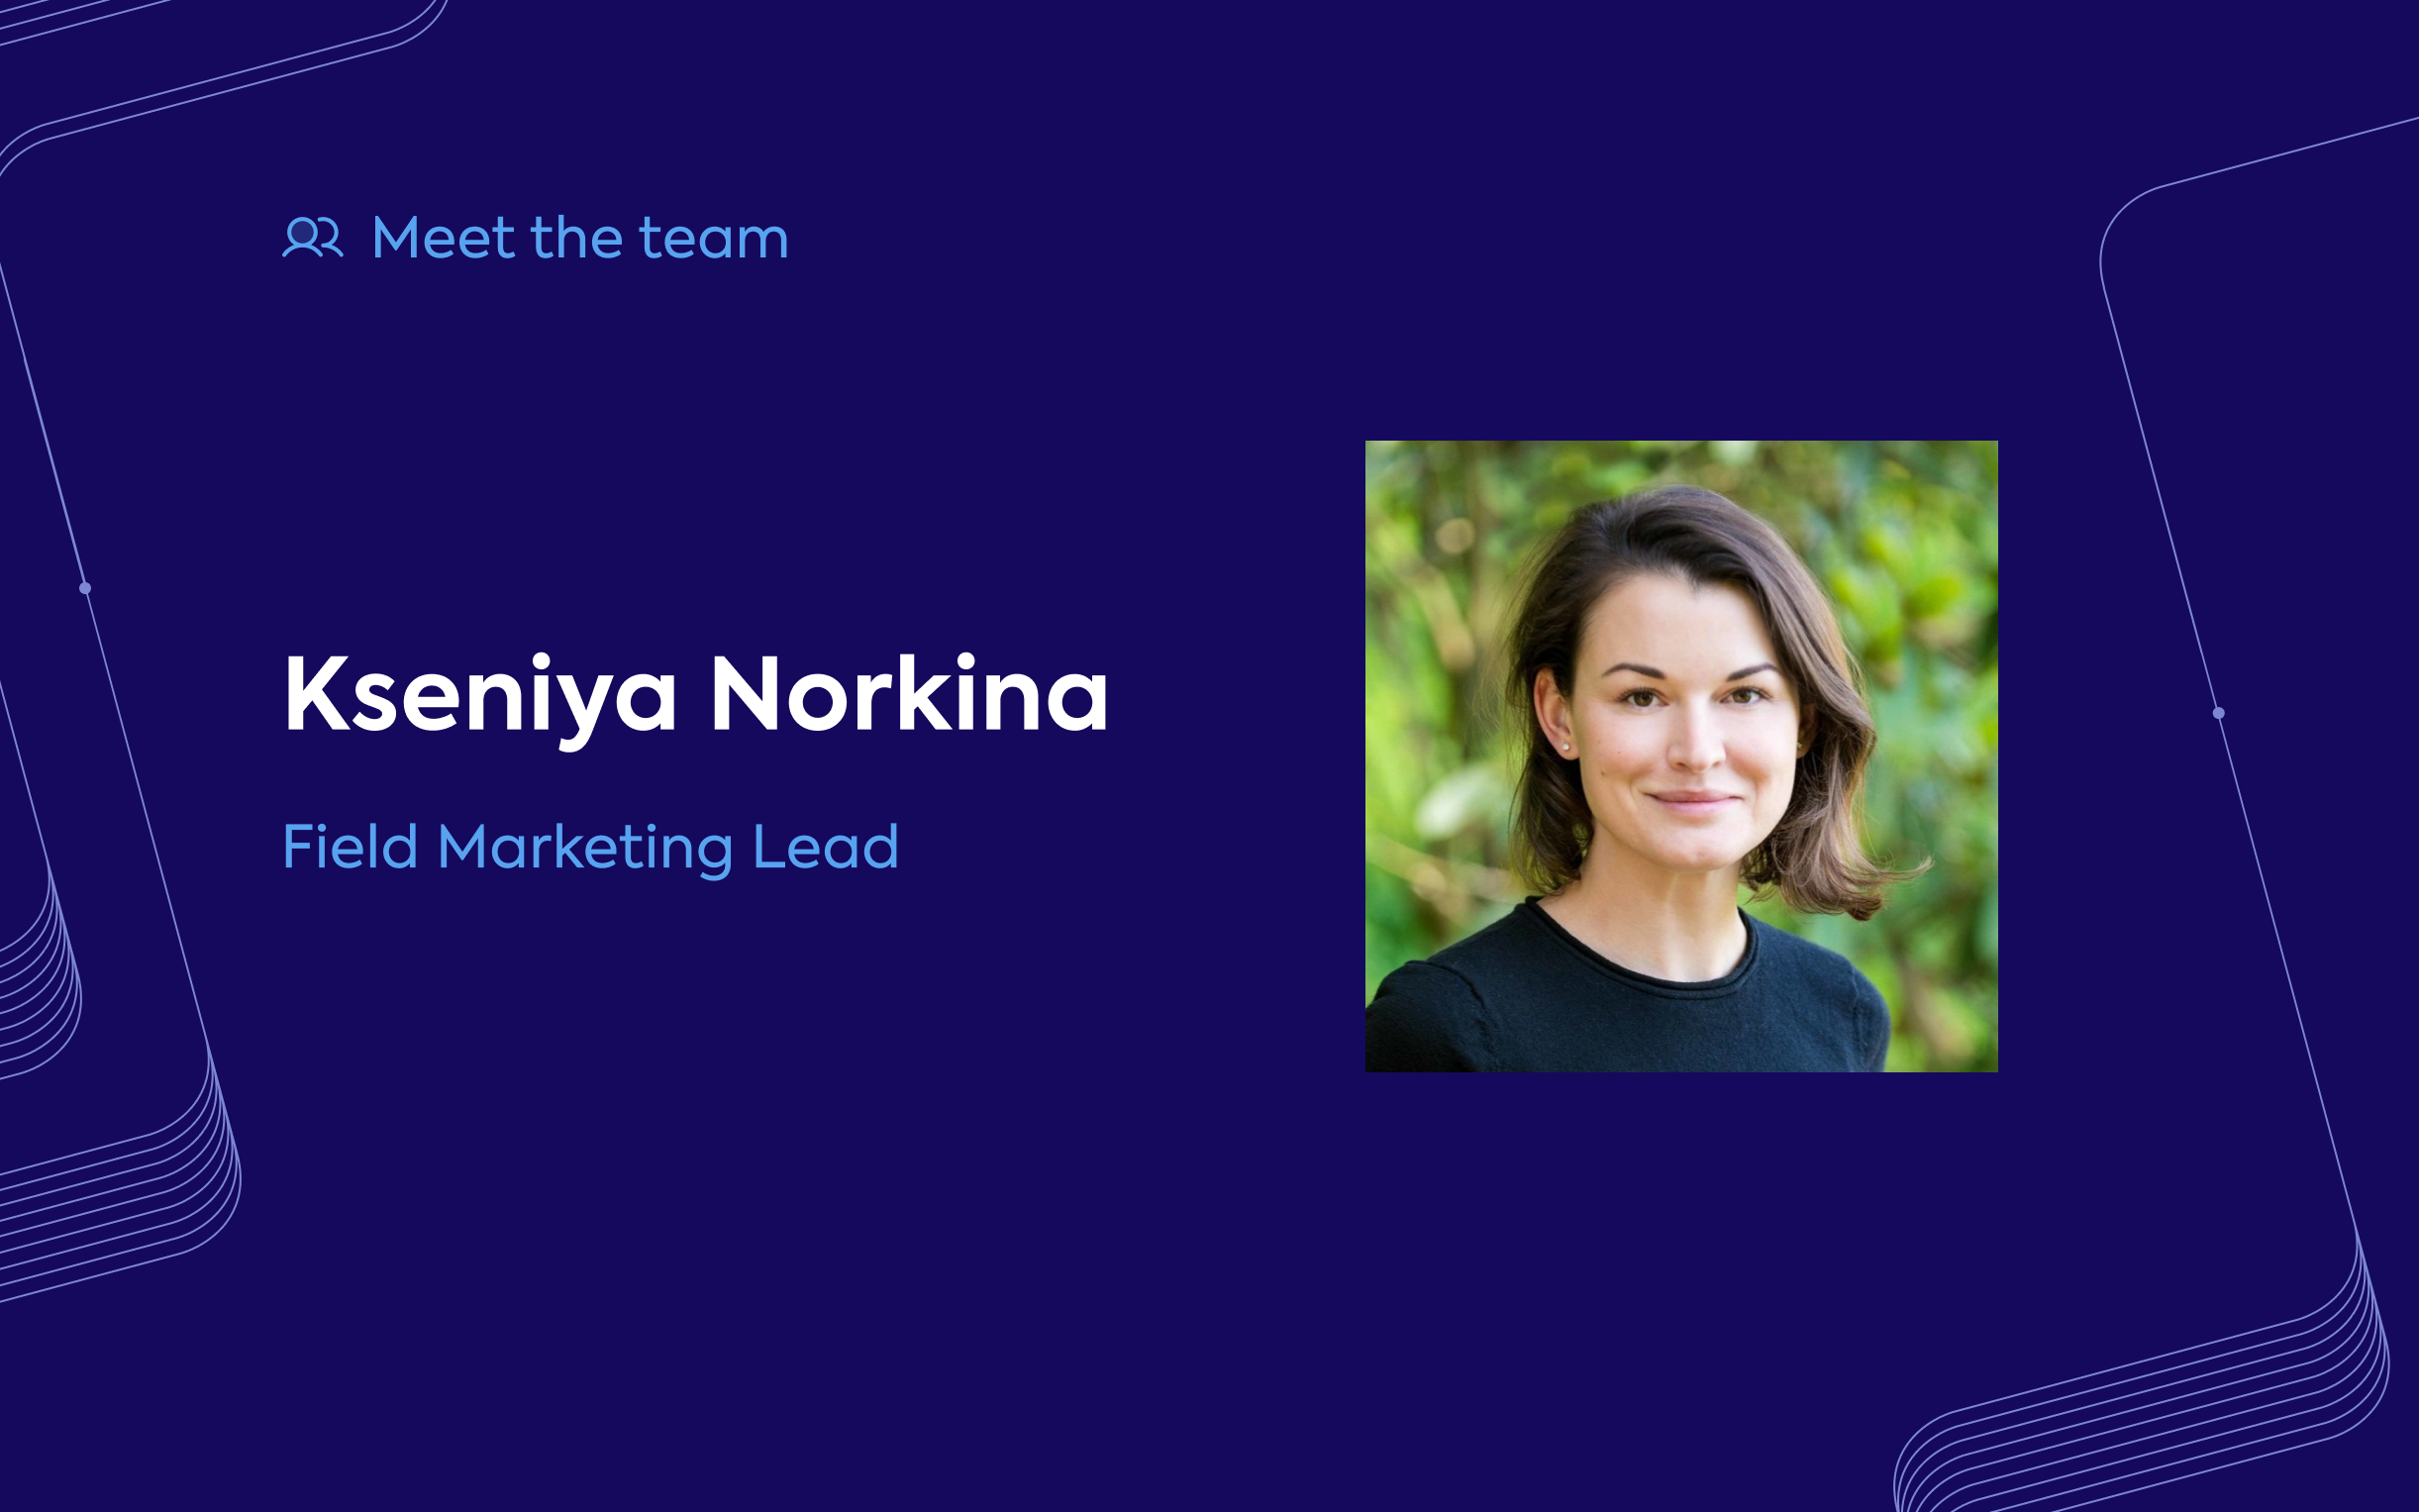 Sit down with Kseniya Norkina, Field Marketing Lead